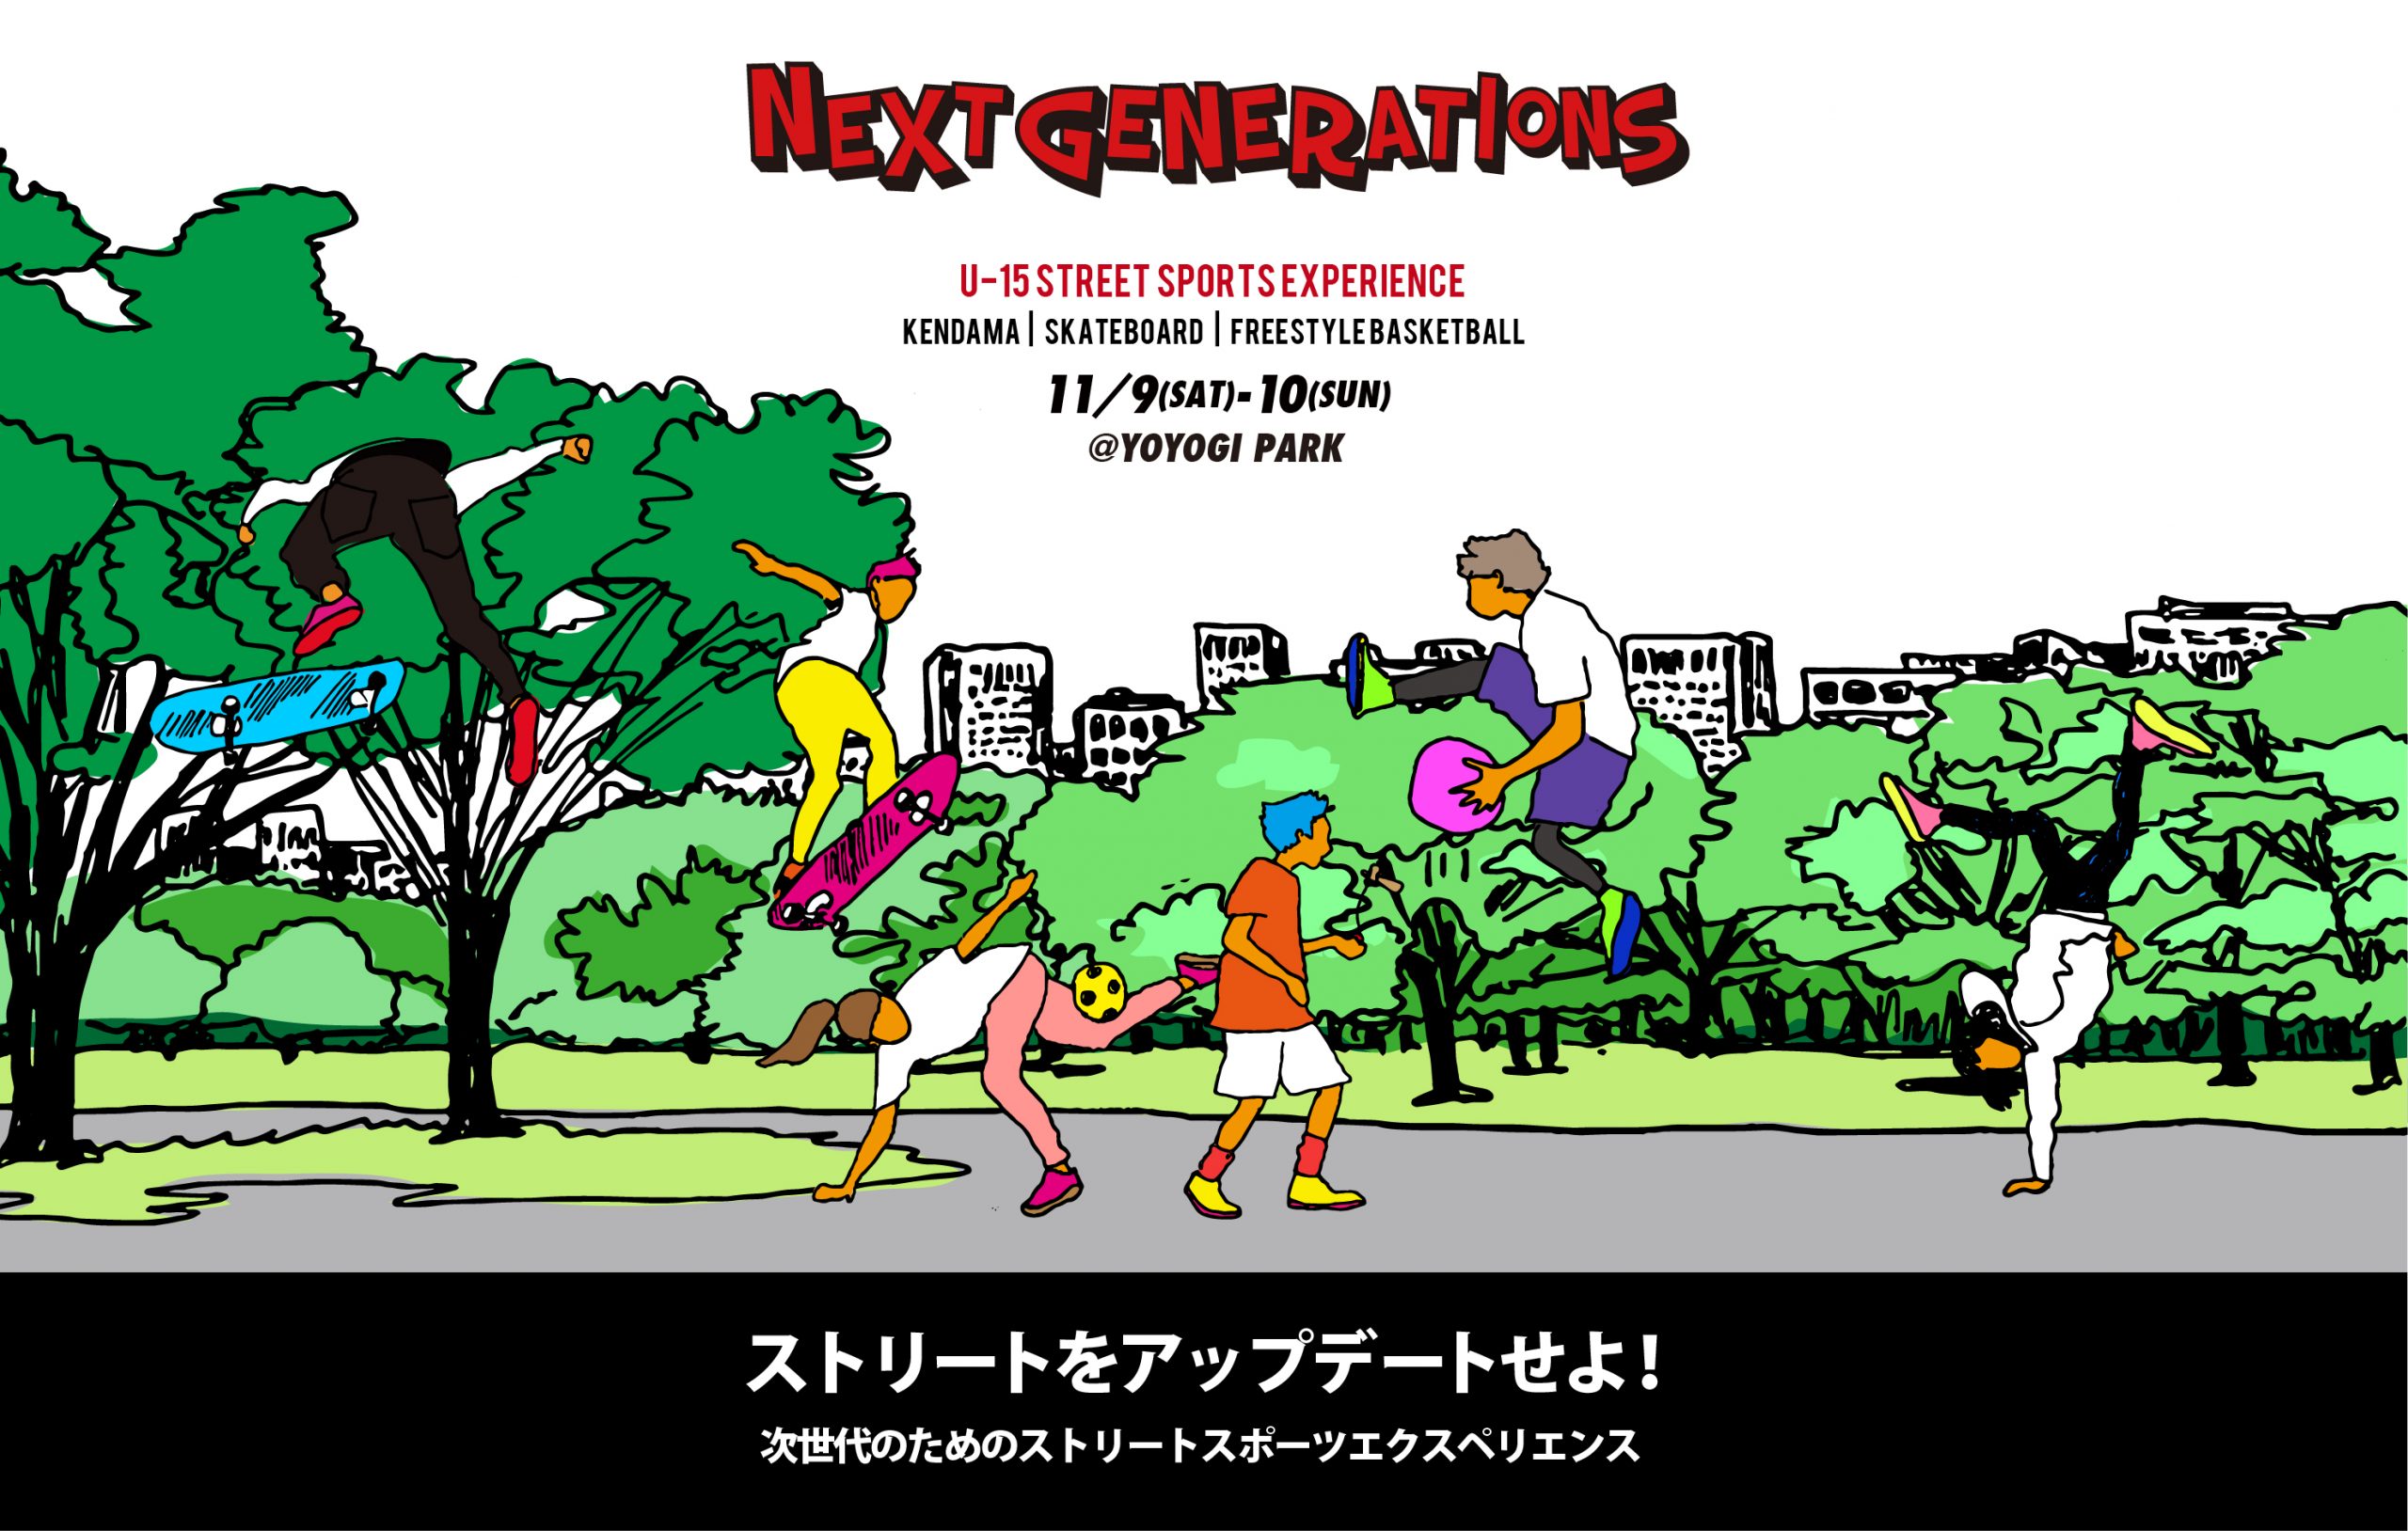 「NEXT GENERATIONS」が11/9-10開催 けん玉コンペティションとスケートボード＆フリースタイルバスケのワークショップ